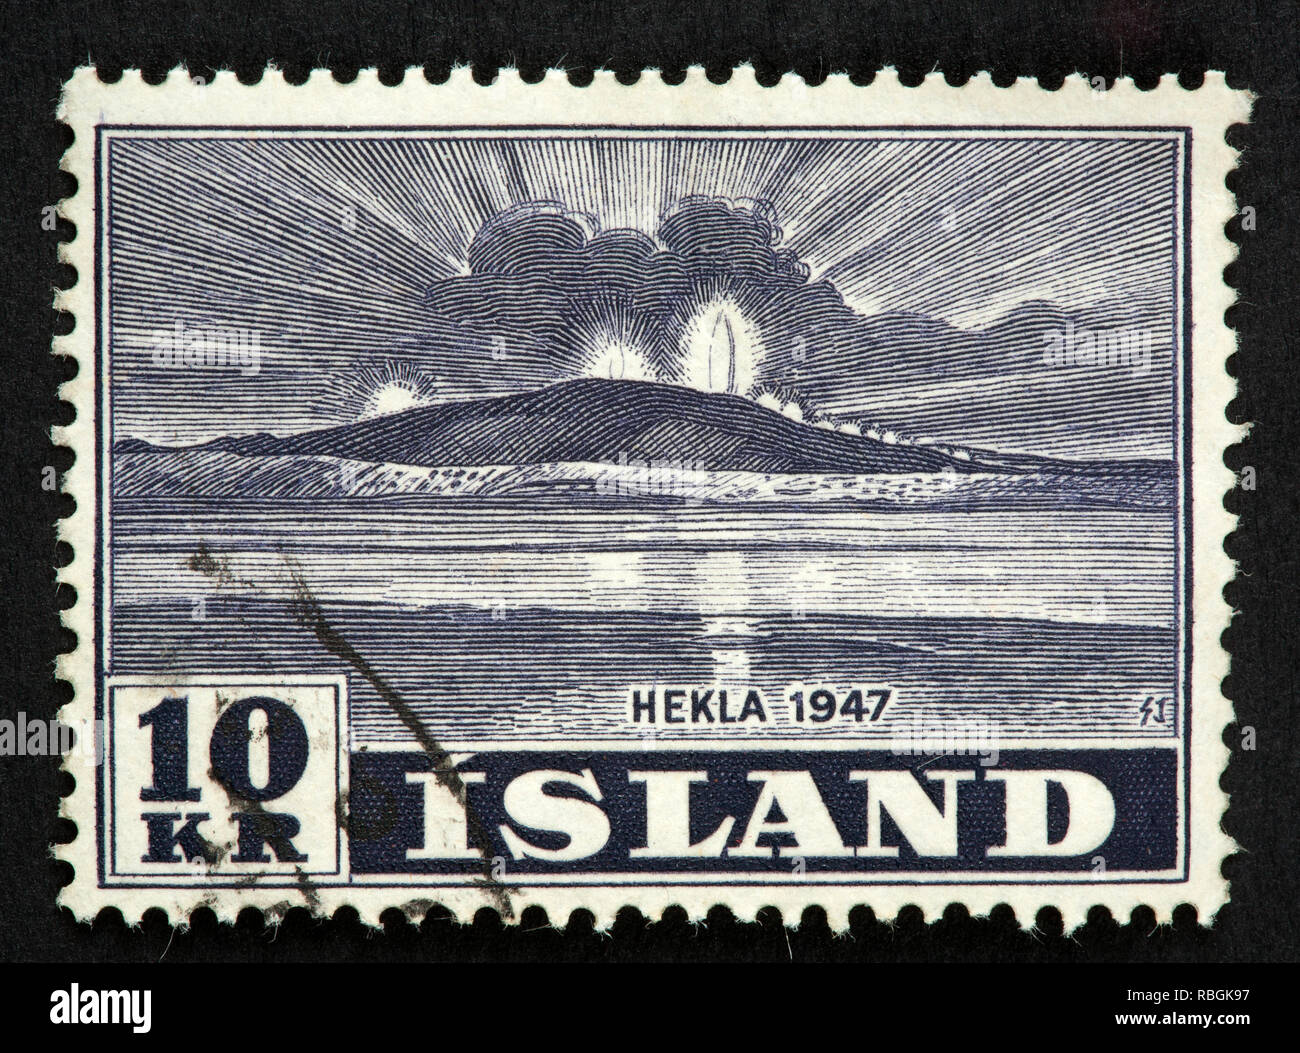 Icelander postage stamp Stock Photo